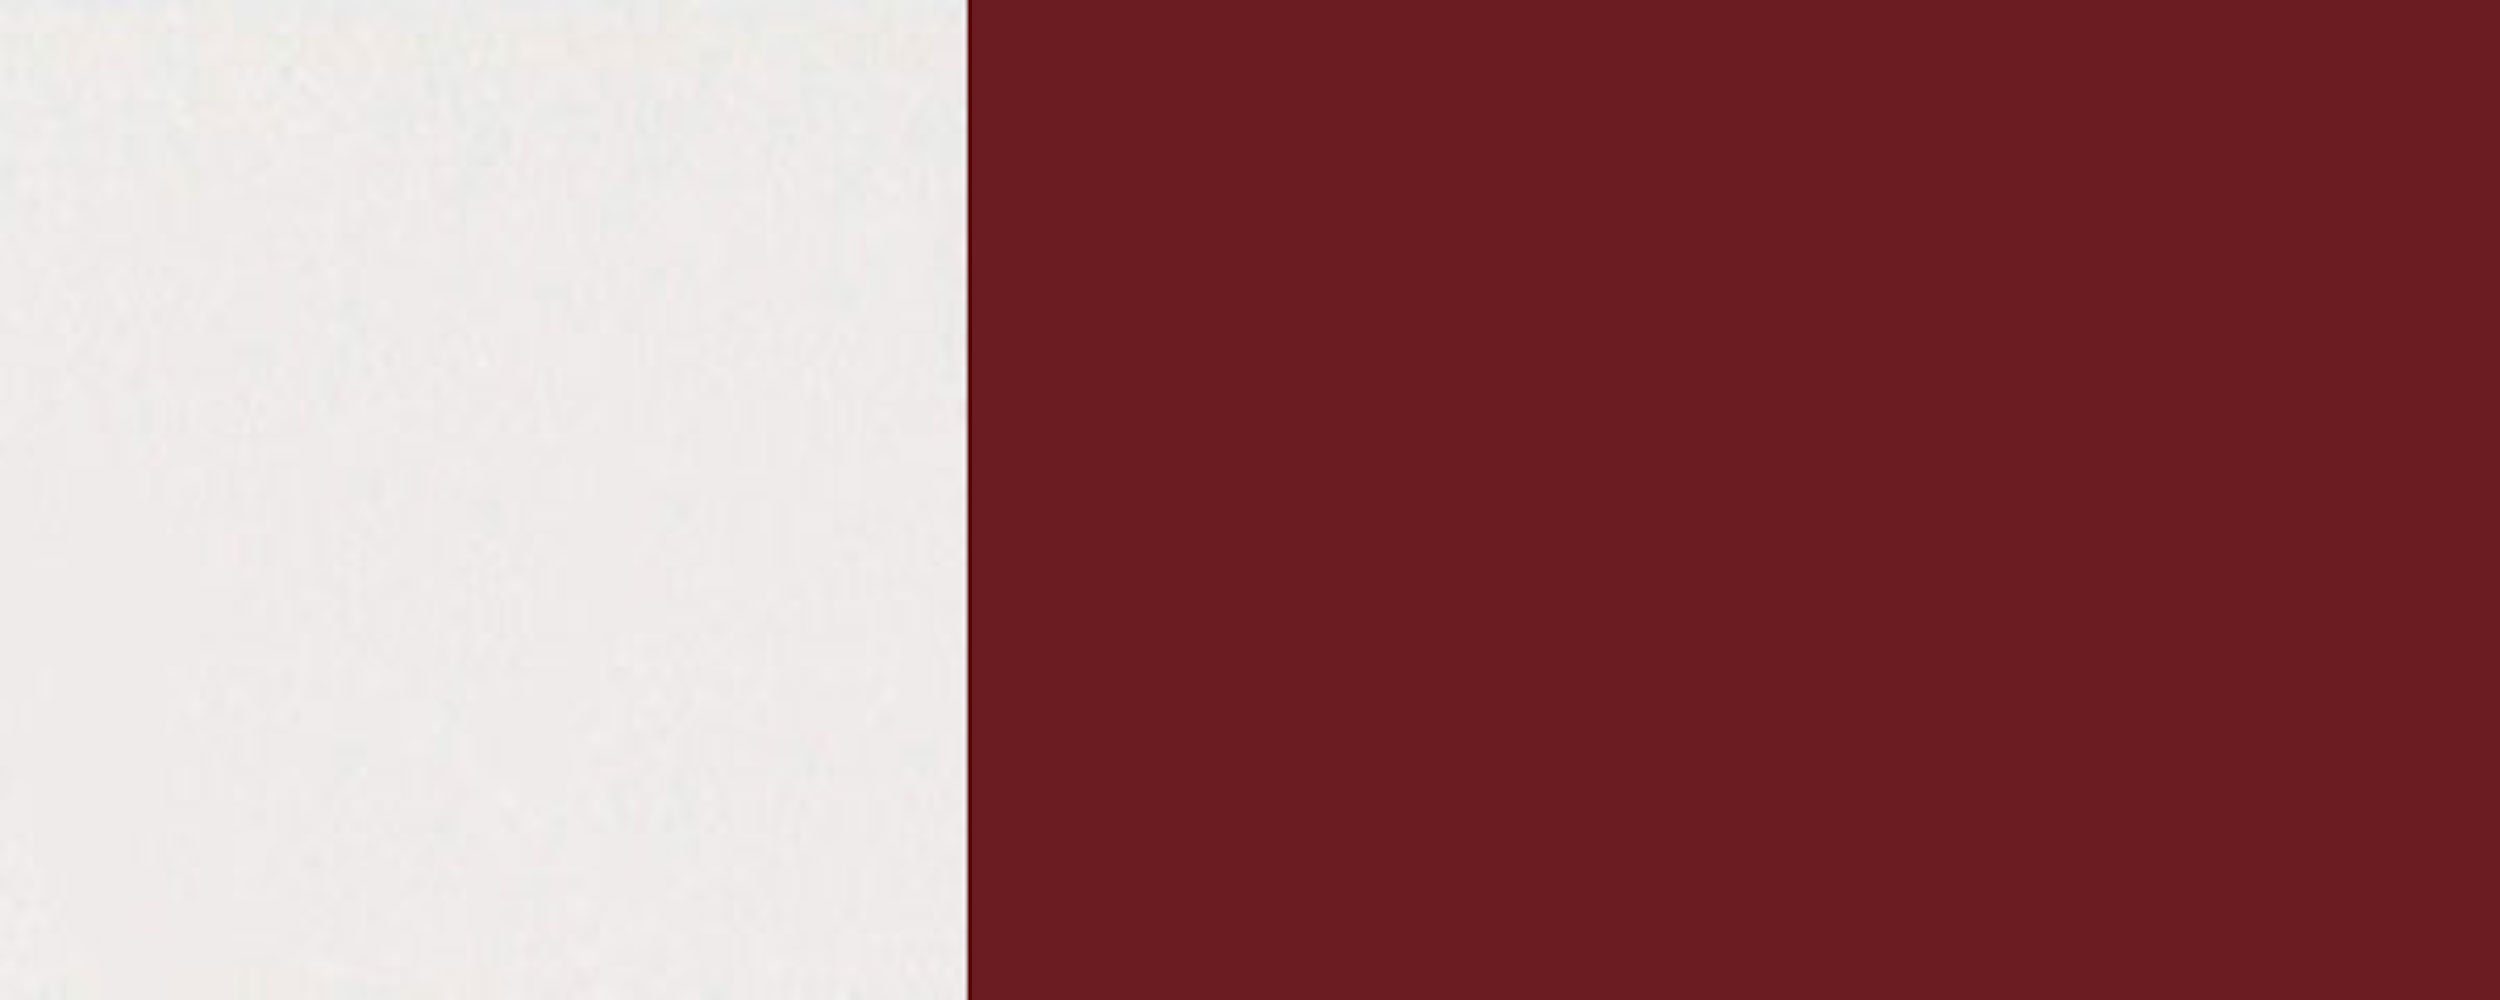 2-türig 60cm Feldmann-Wohnen wählbar 1 und Fach für Einbaugerät matt mit Korpusfarbe Front- purpurrot Backofenumbauschrank (Rimini) 3004 RAL Rimini